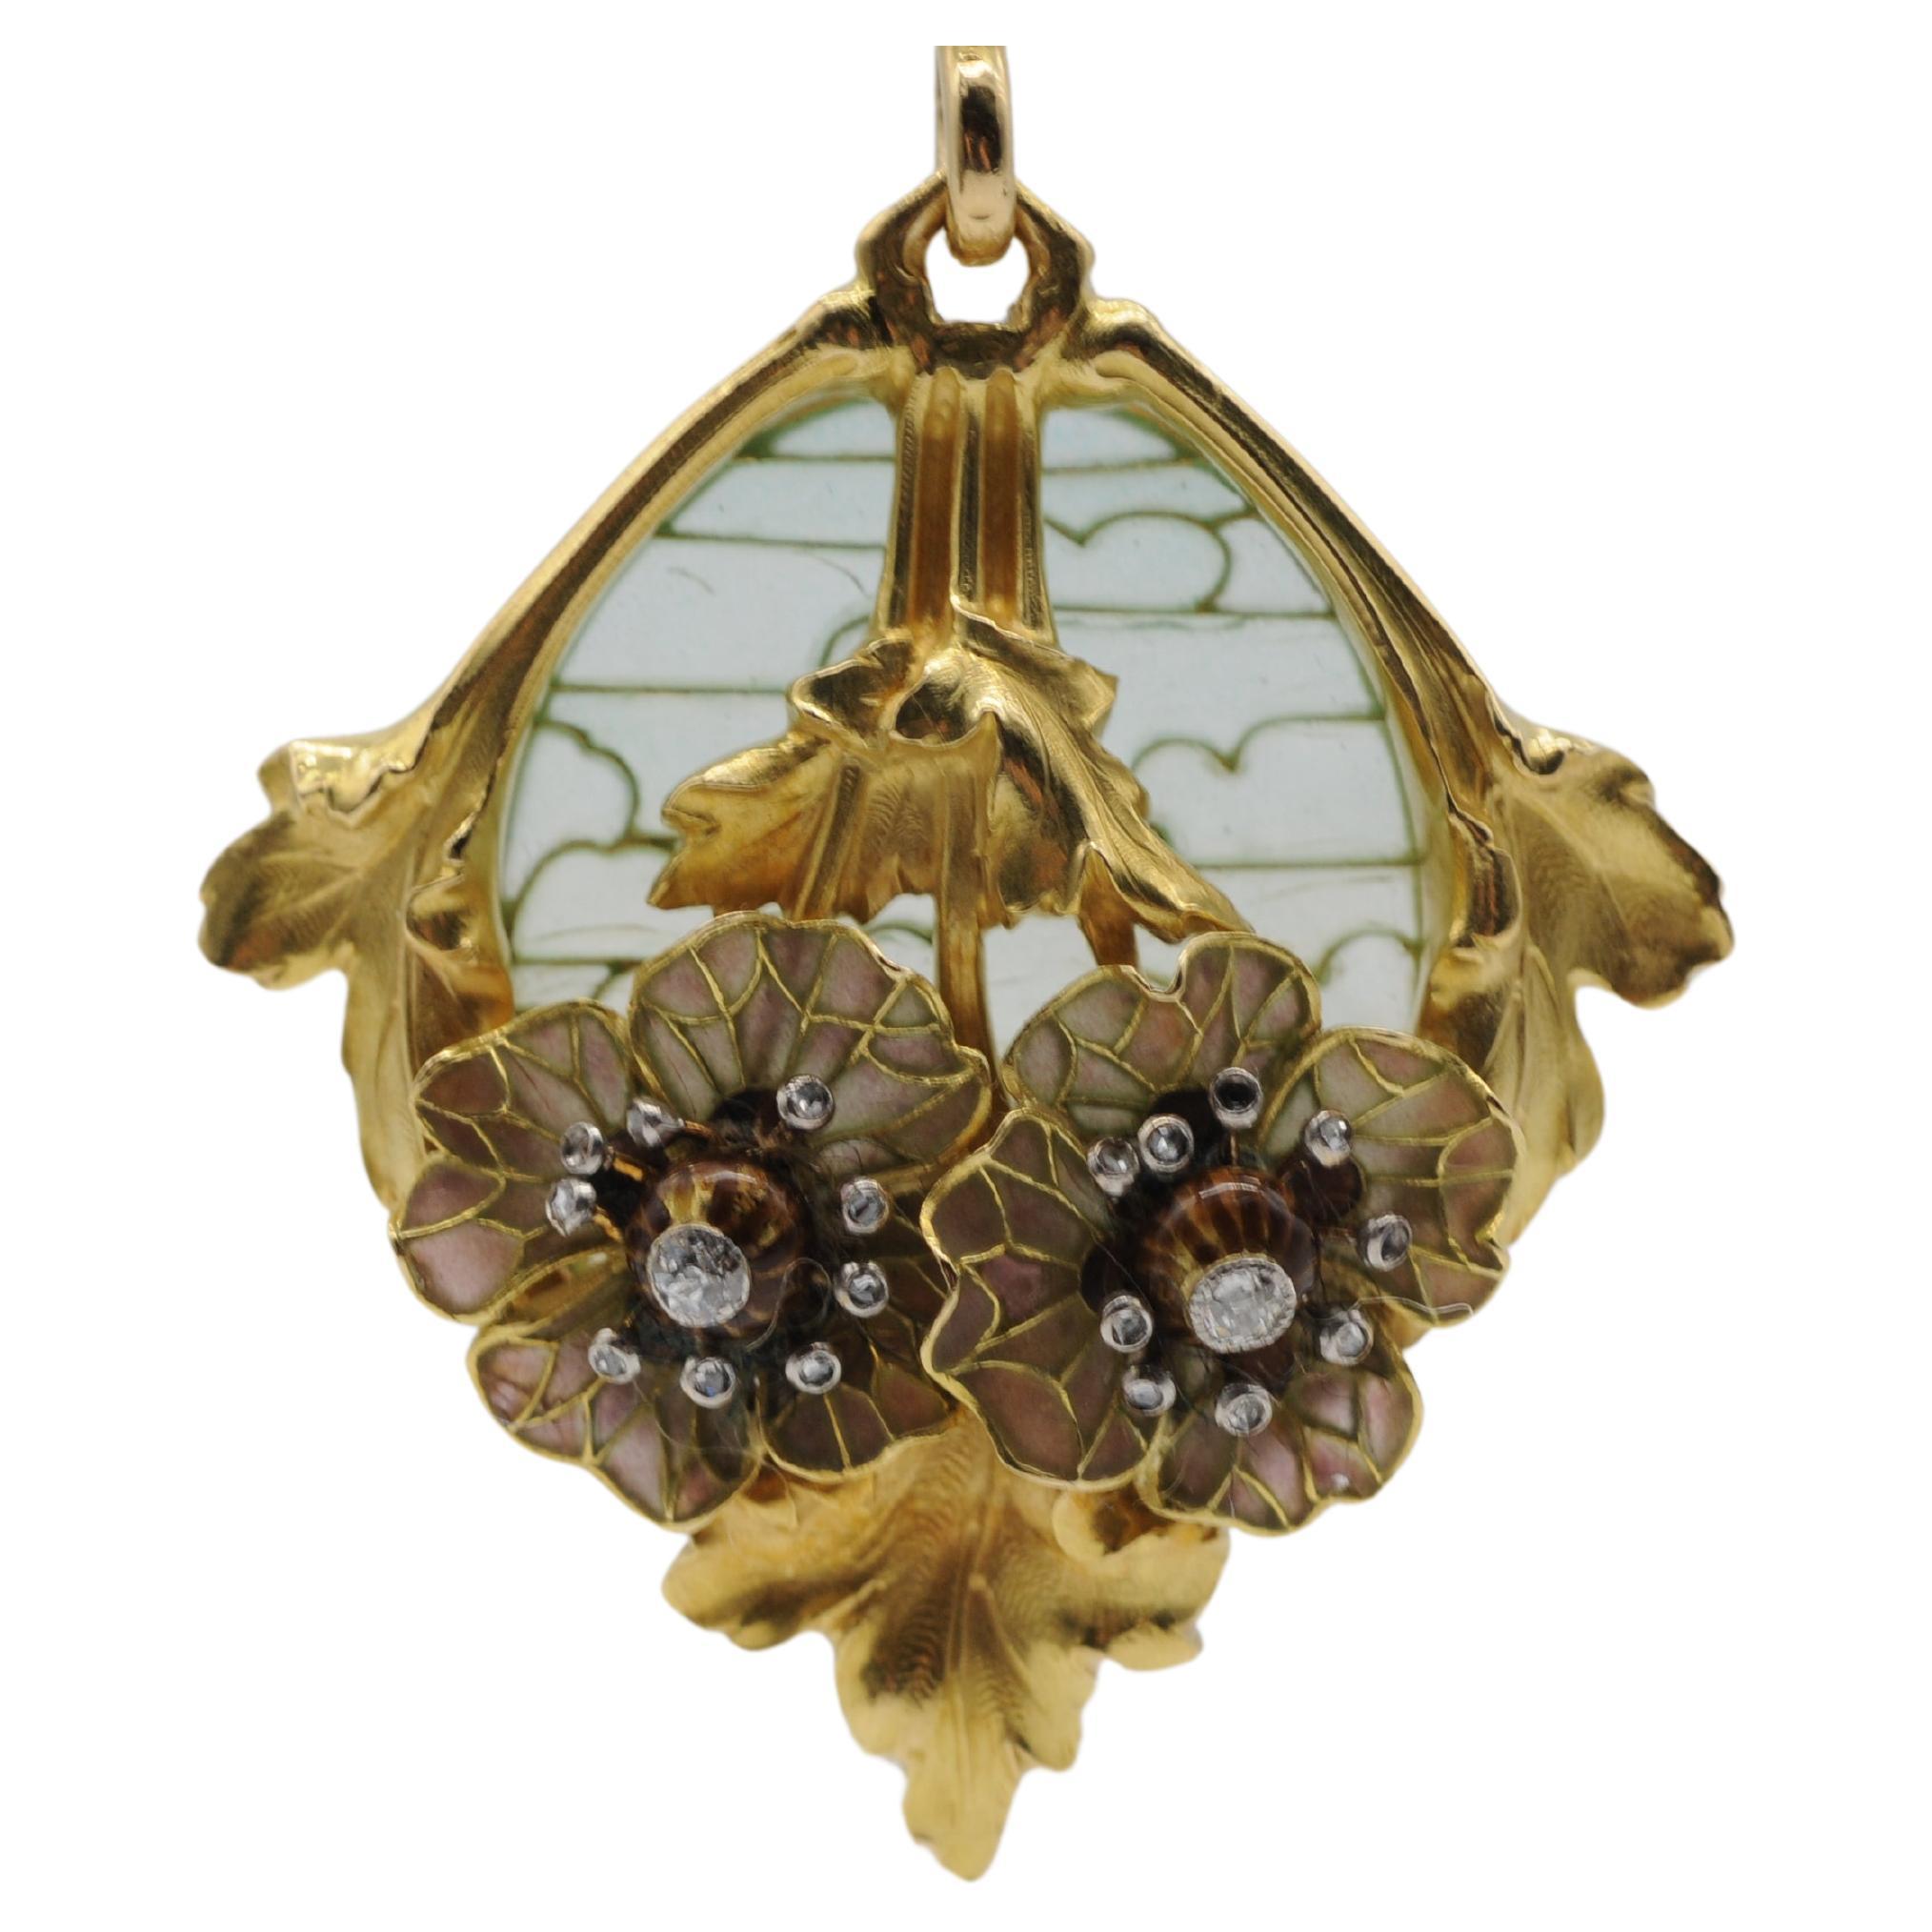 Jugendstil Art Nouveau elaborate artistic necklace with diamonds and gold For Sale